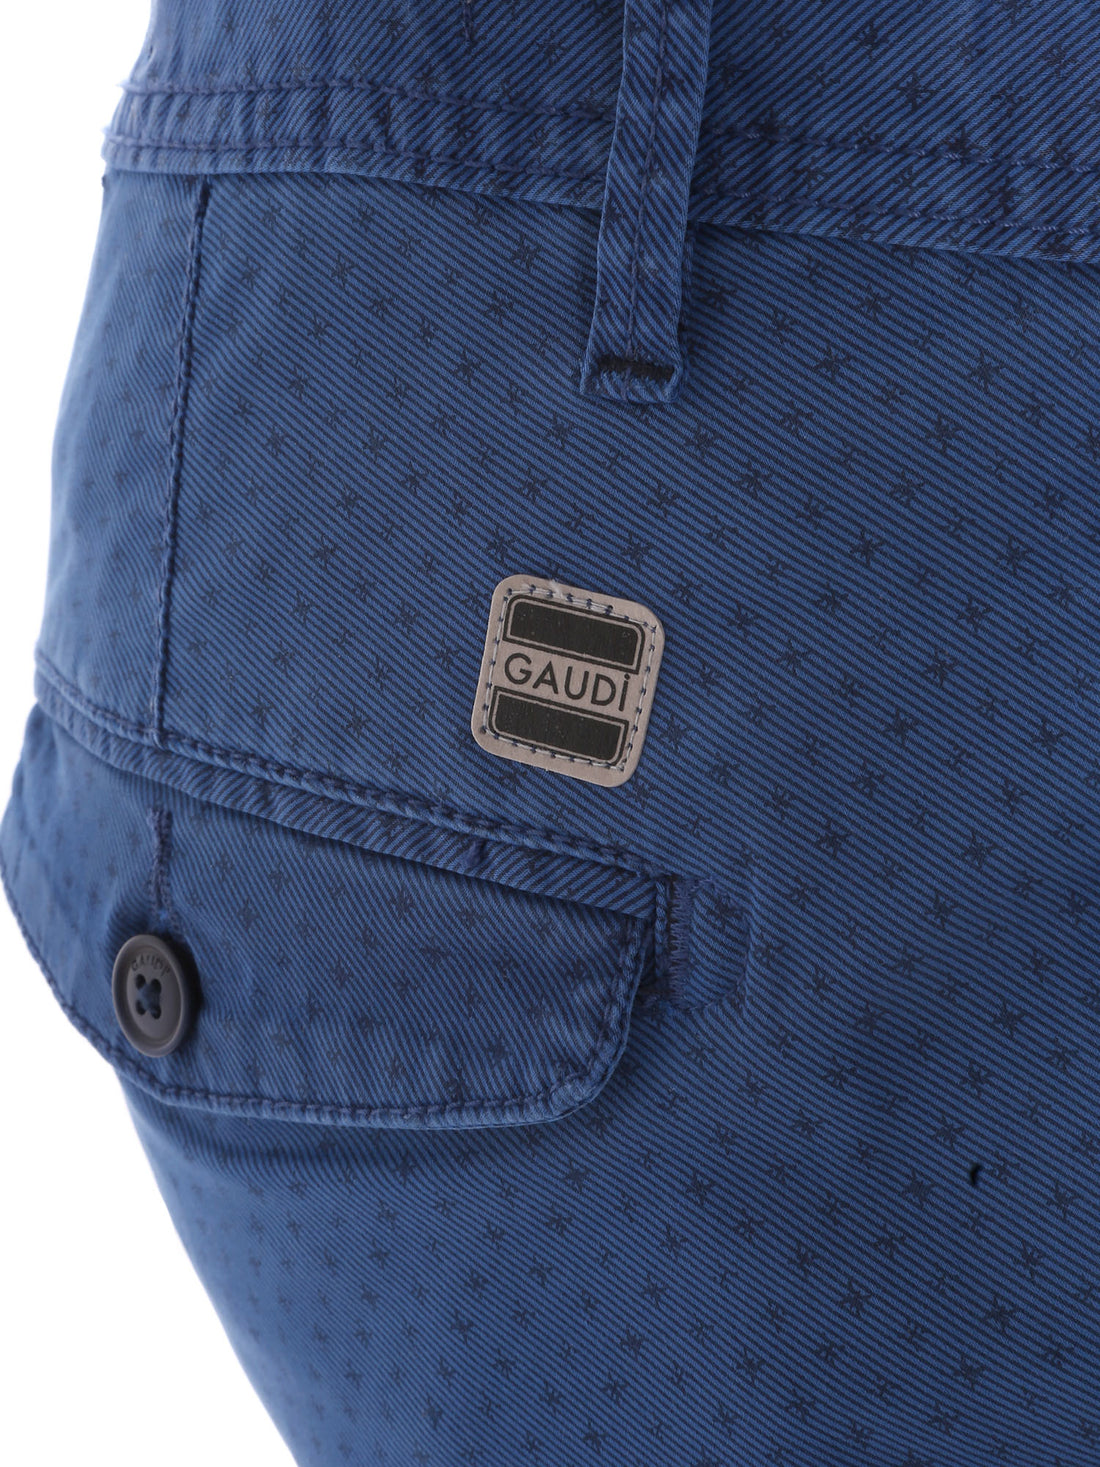 Pantaloni Blu Gaudi